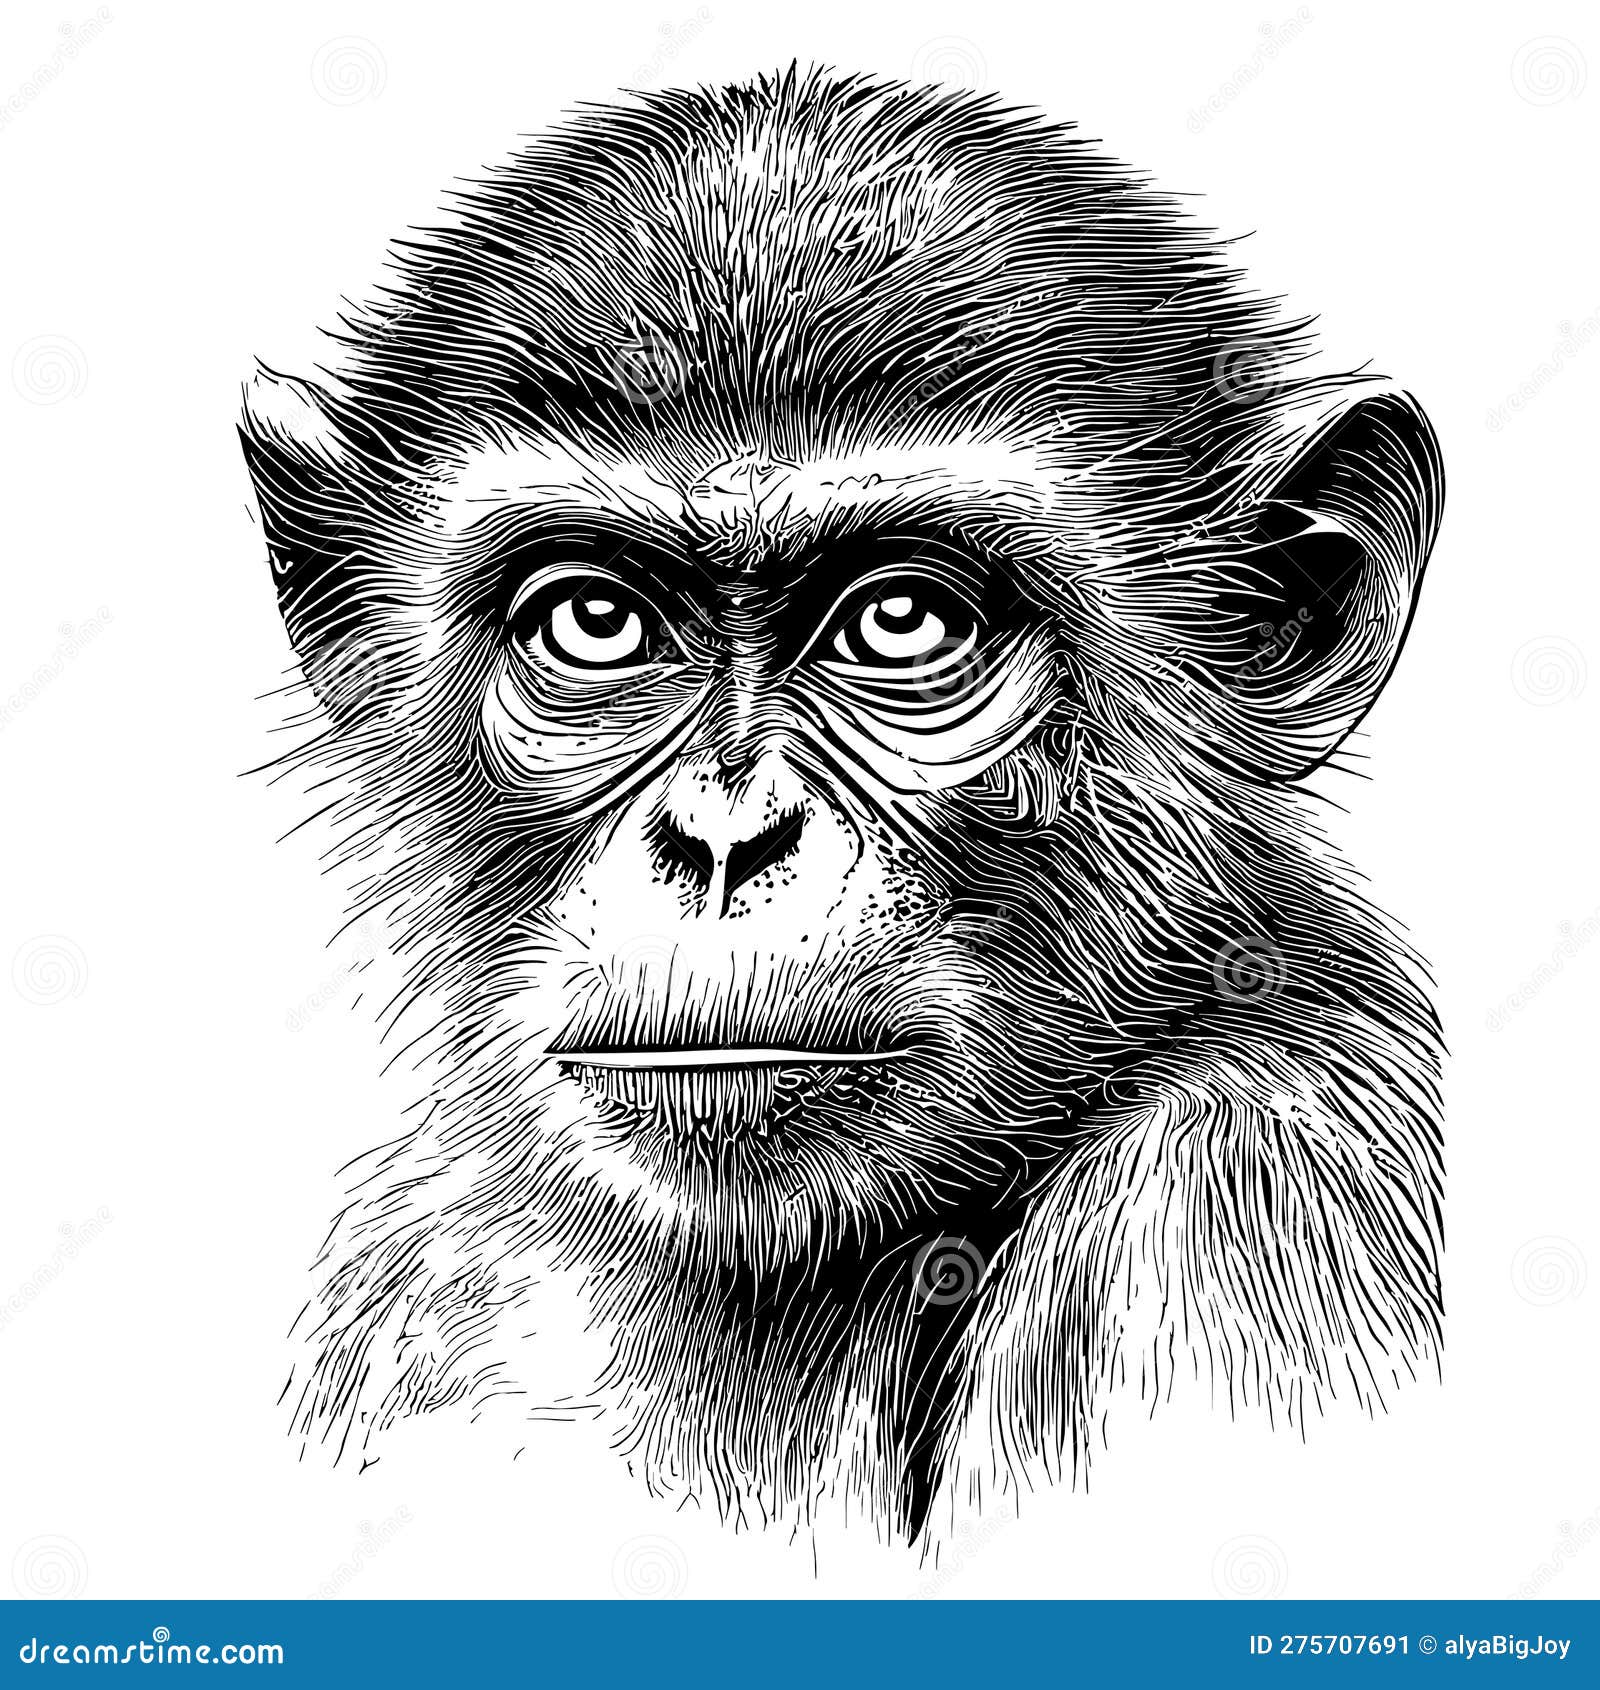 pencil-art-macacos-09  Animal portraits art, Monkey art, Pencil drawings  of animals